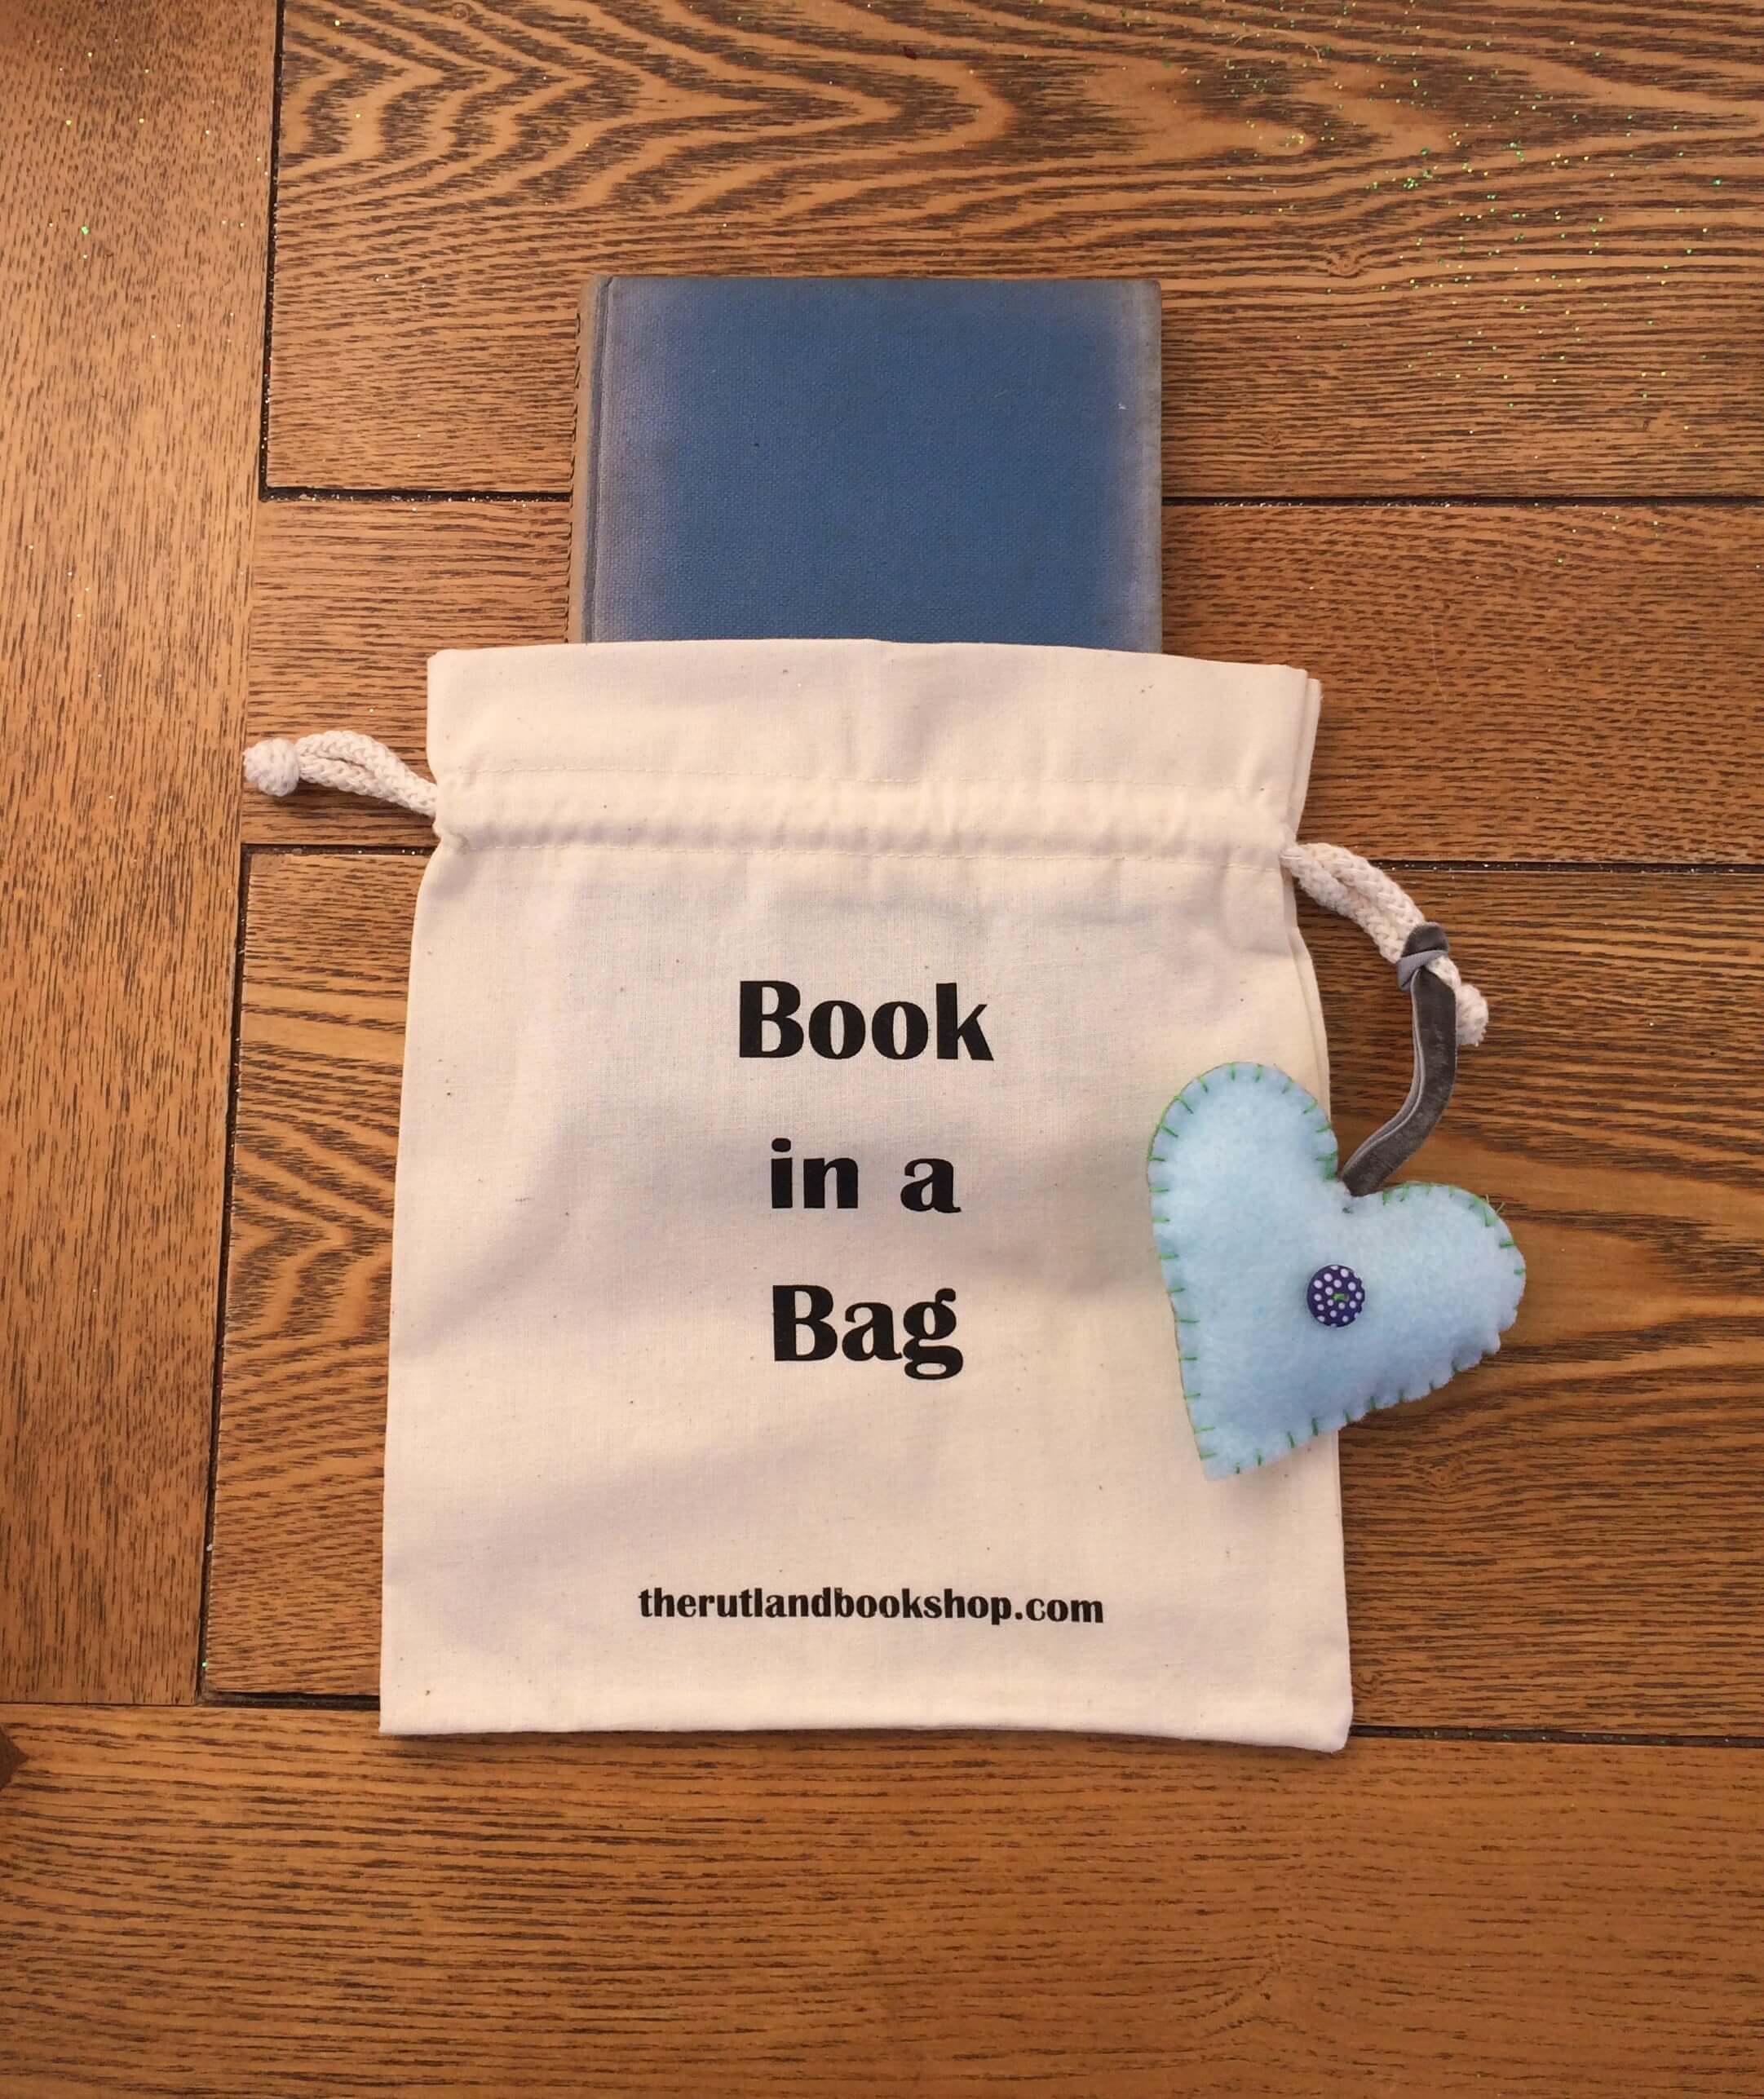 Can it be True book in a bag